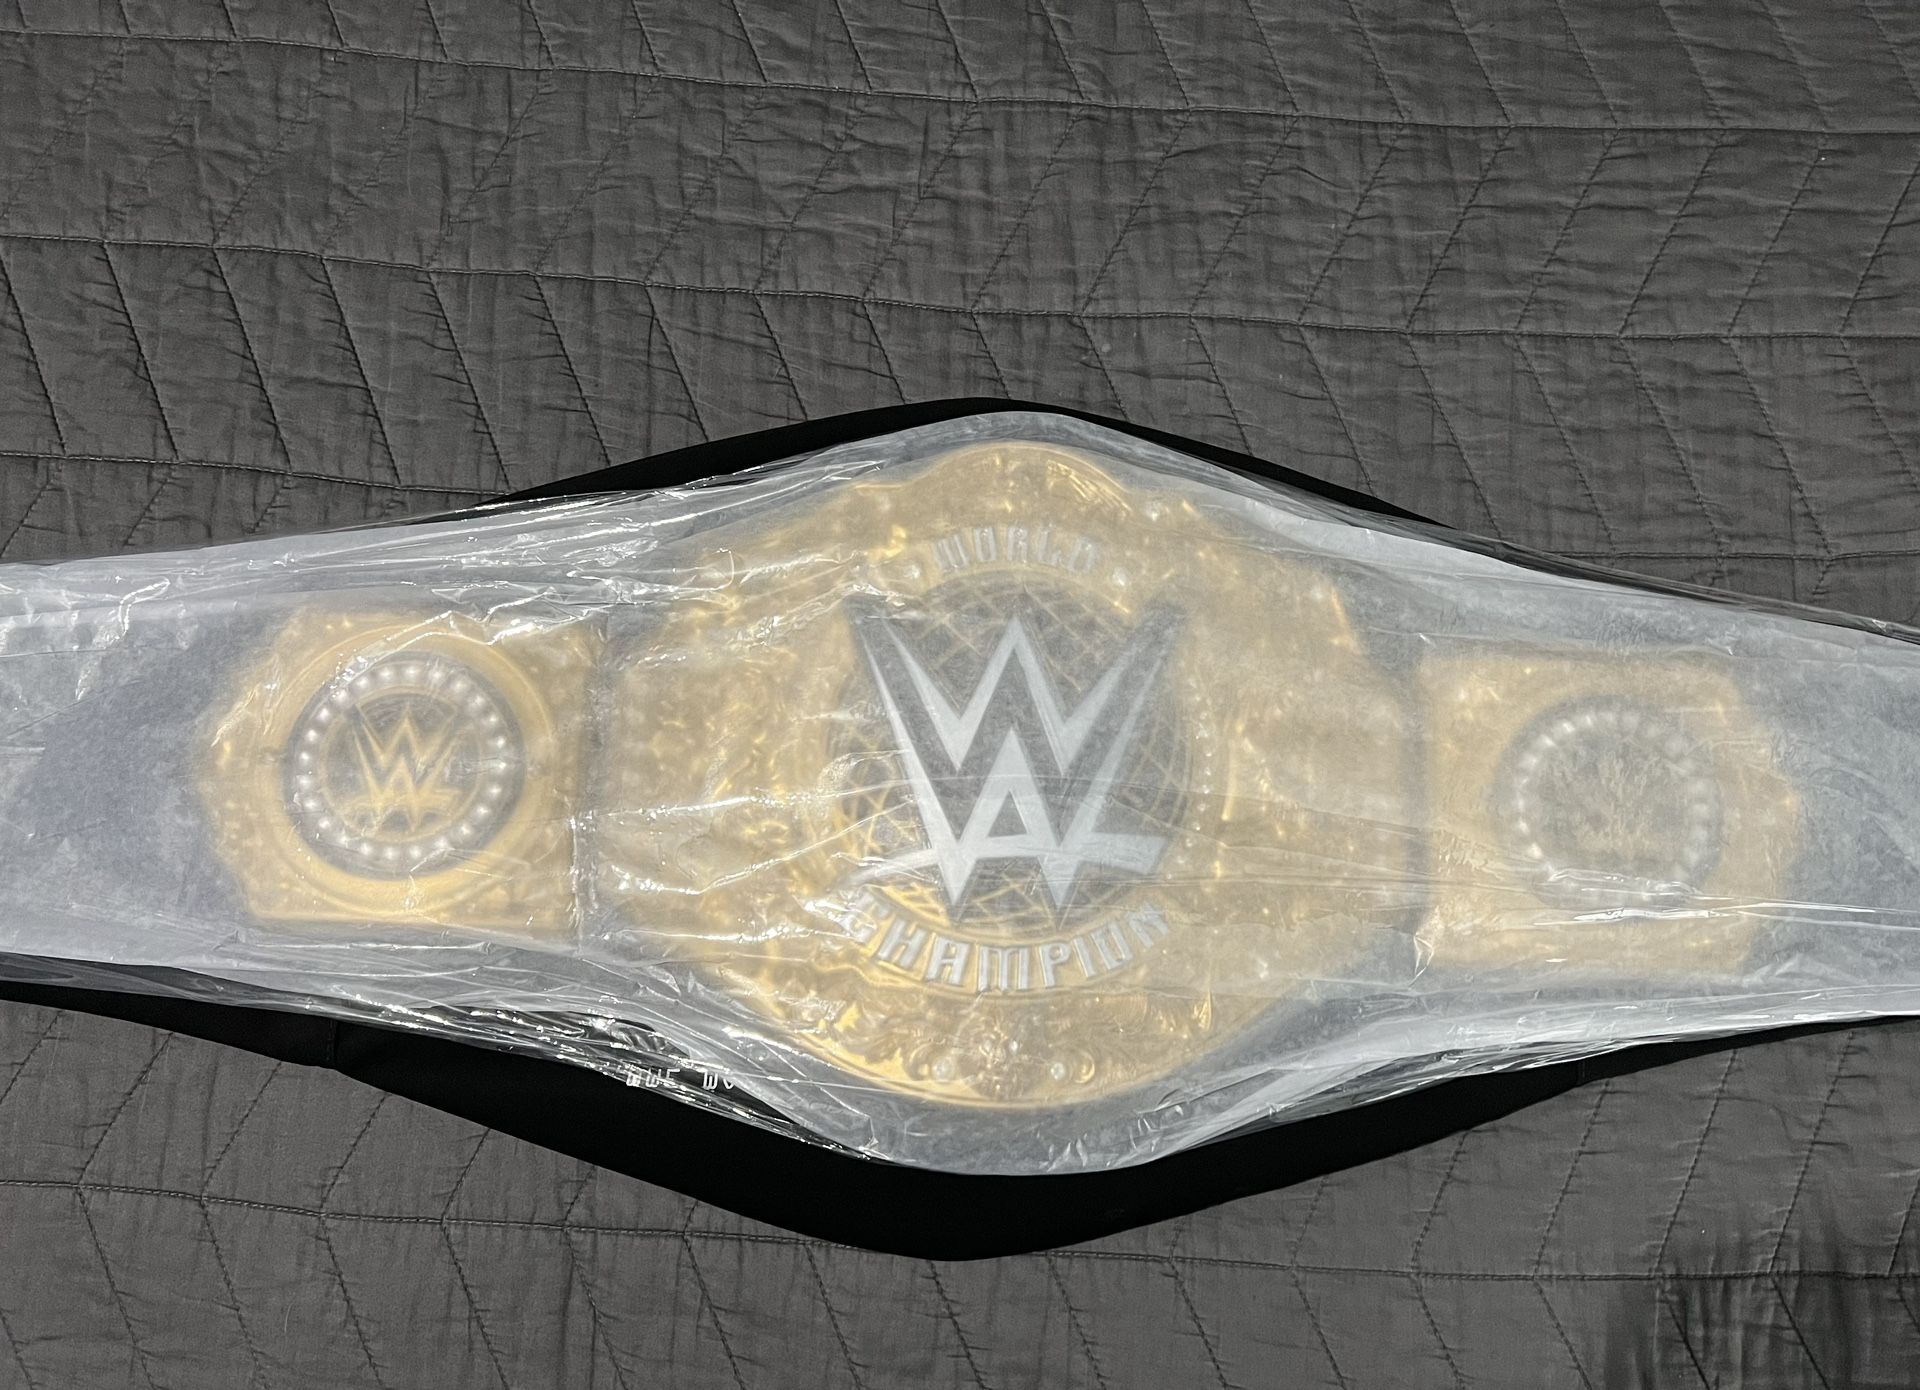 WWE Commemorative Belt